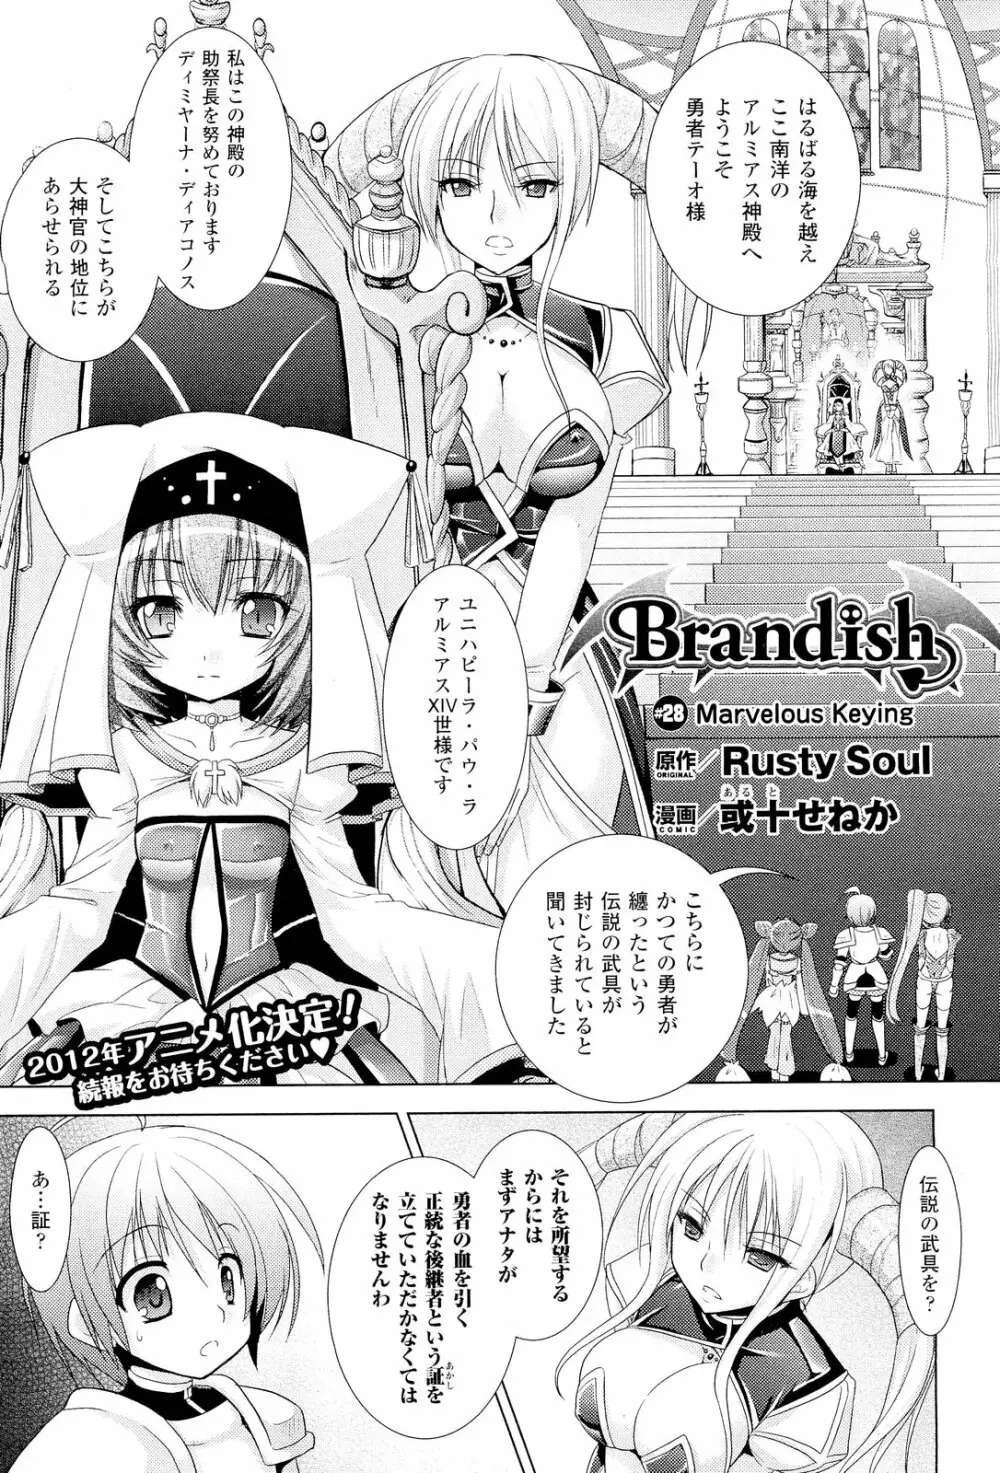 Brandish 5 第26-30, Extra 3話 40ページ